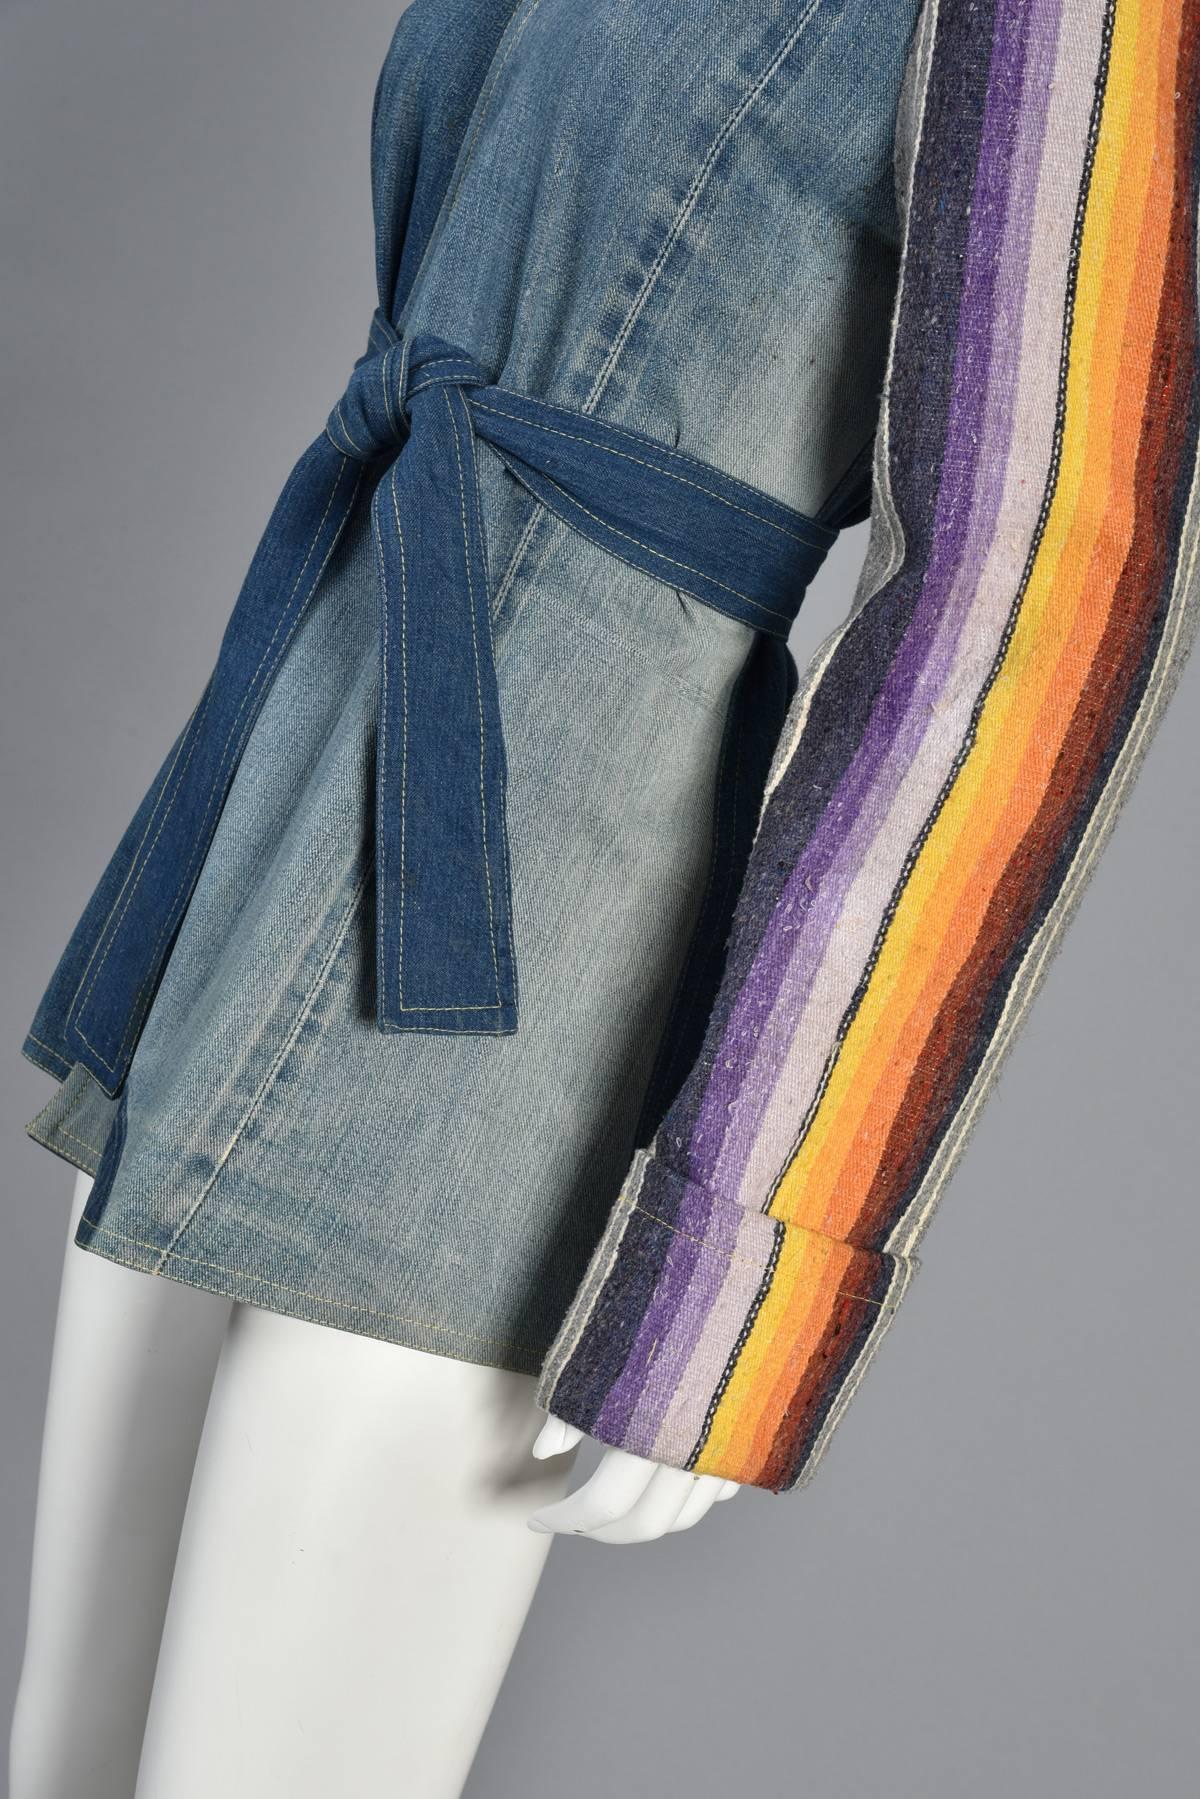 Women's 1970s Patchwork Denim Jacket with Rainbow Stripe Wool Blanket Sleeves